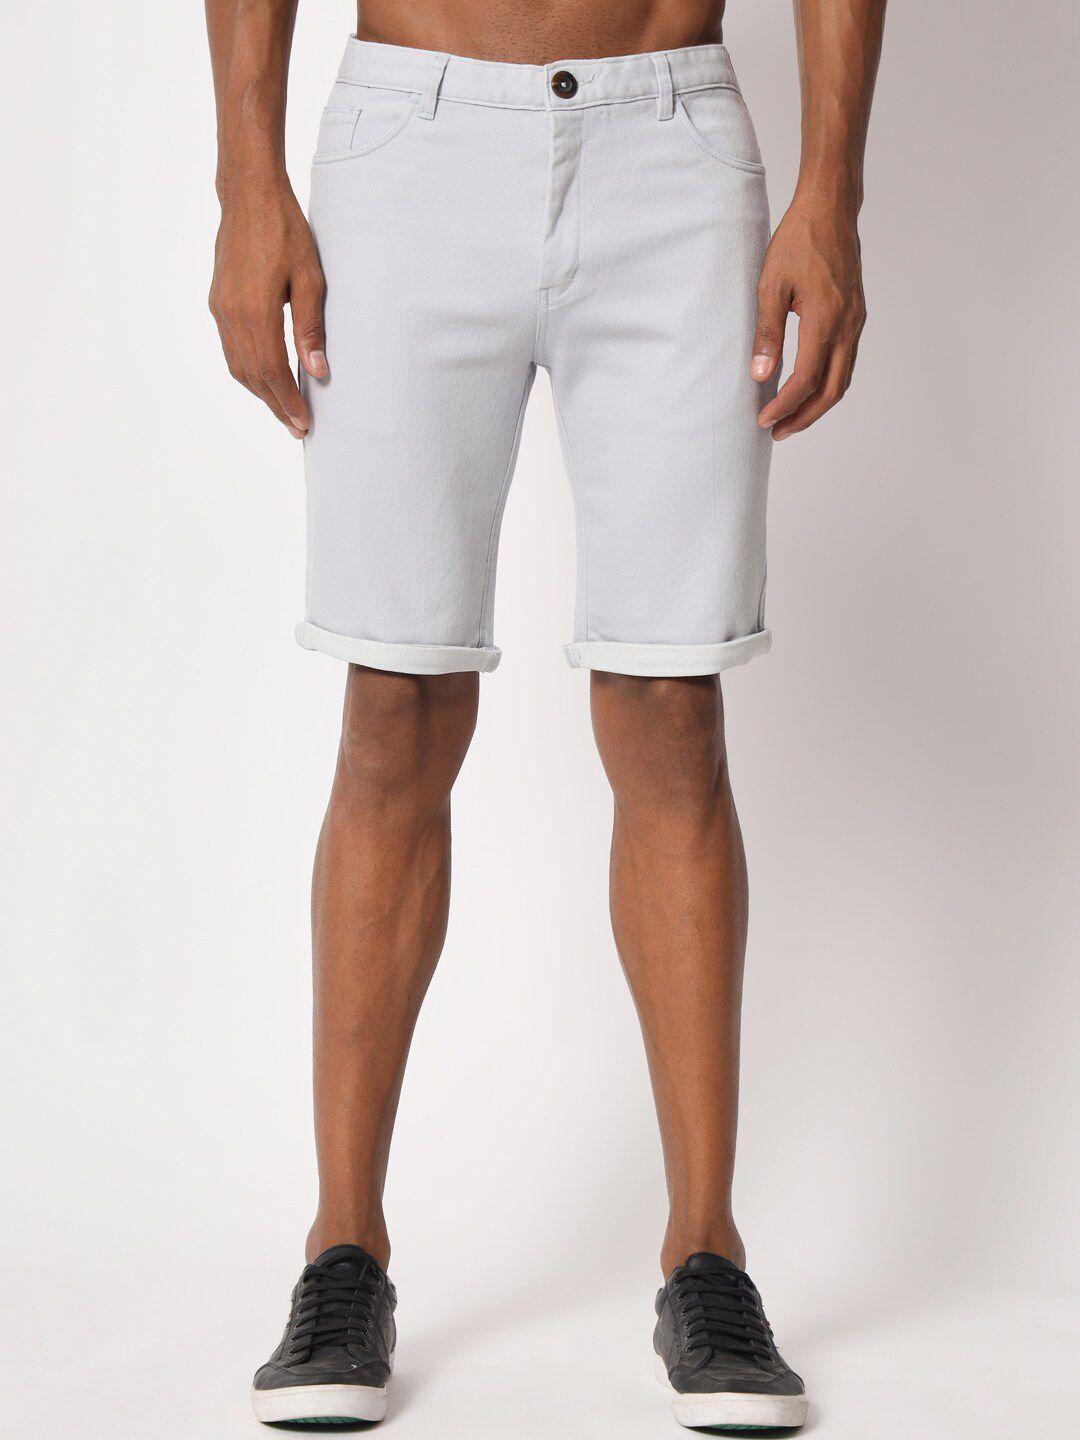 aristitch-men-mid-rise-denim-shorts